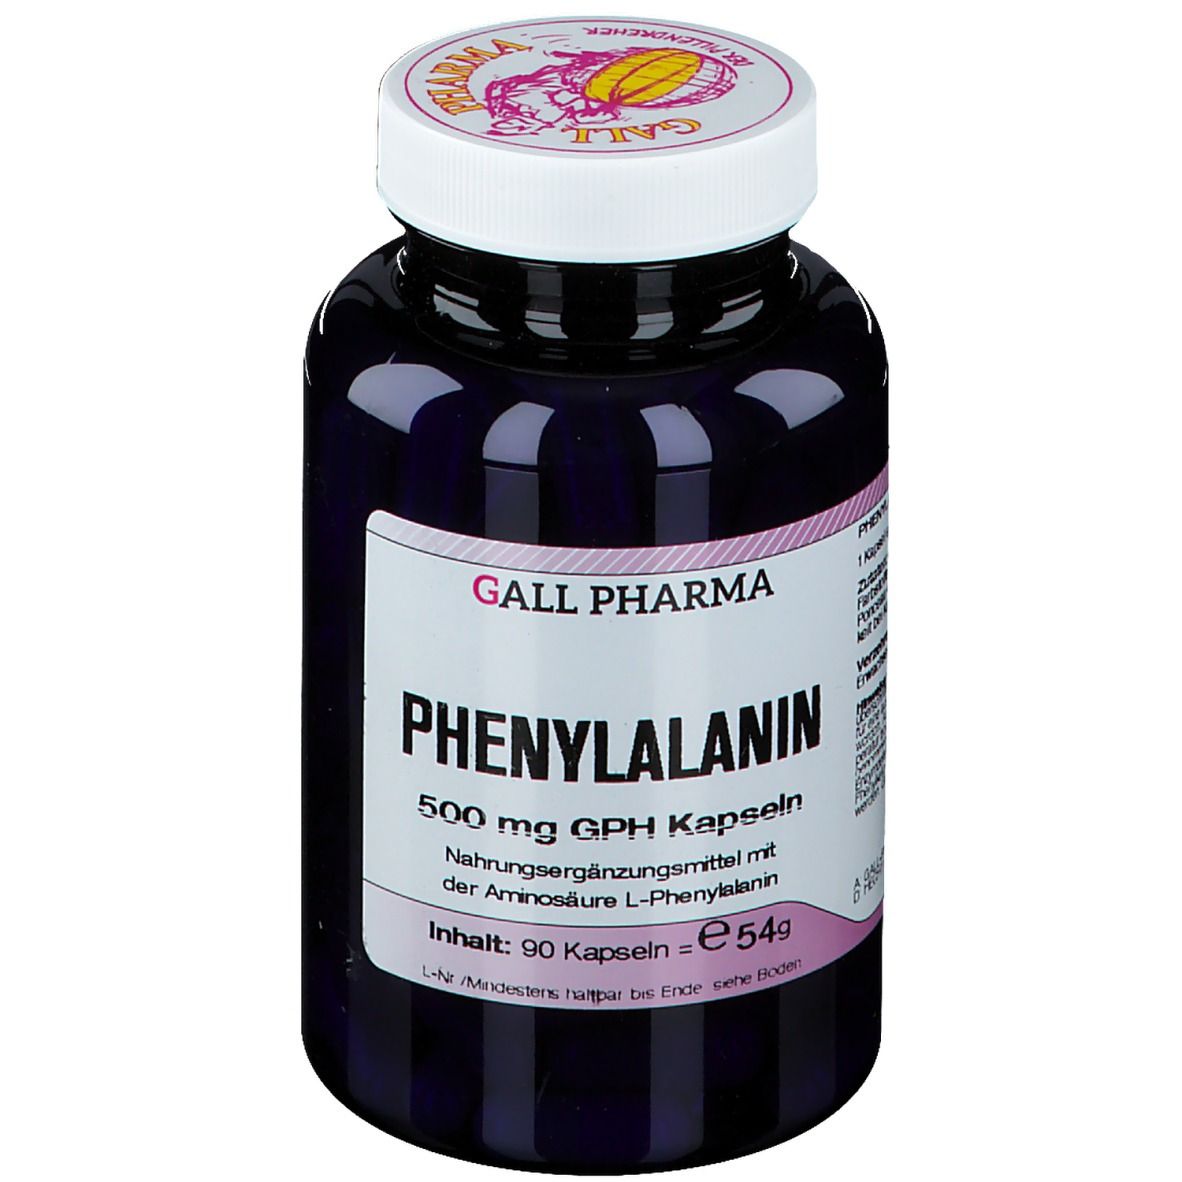 GALL PHARMA Phenylalanin 500 mg GPH